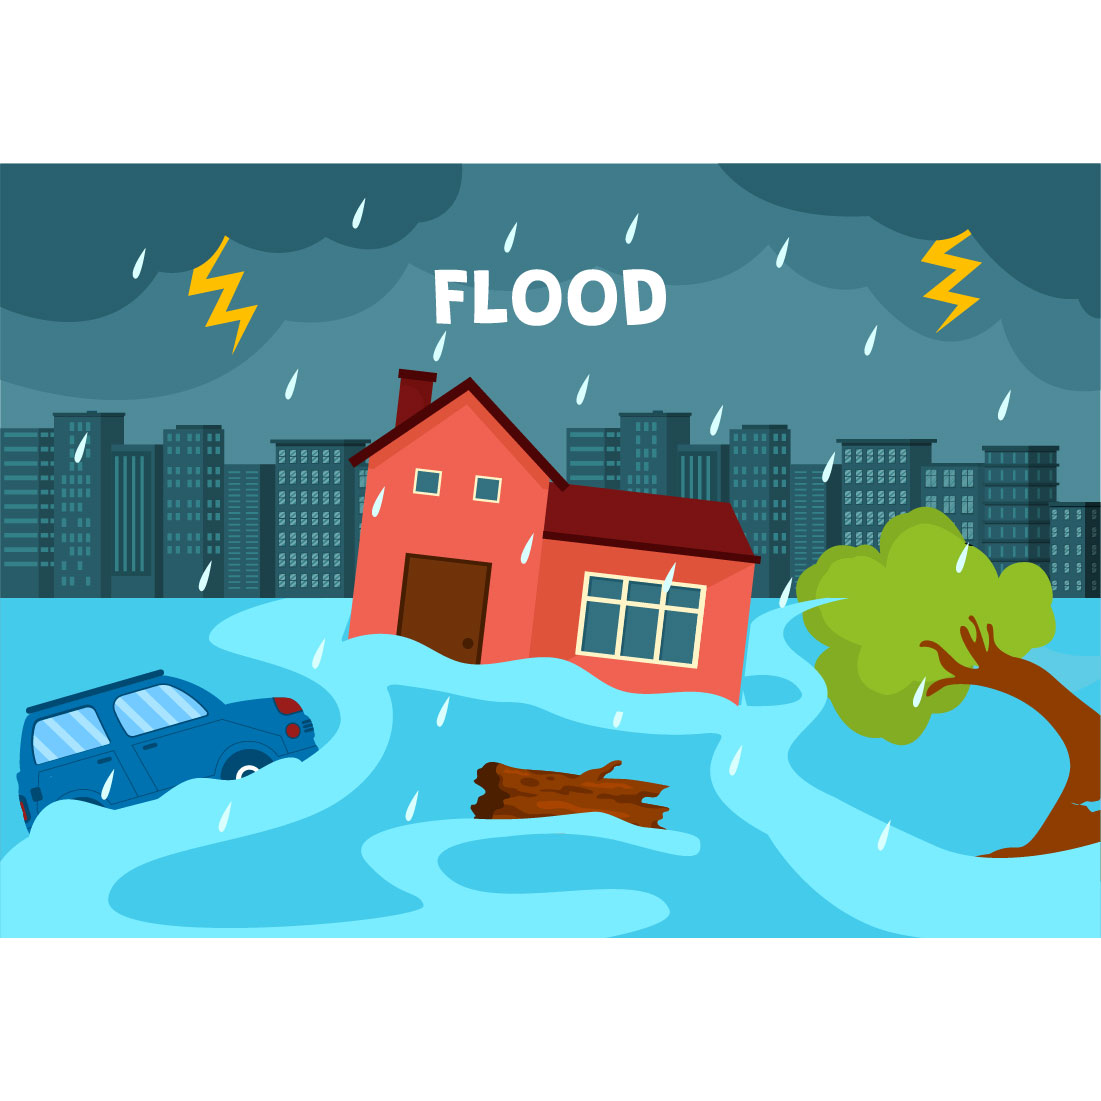 6 Floods Vector Illustration cover image.